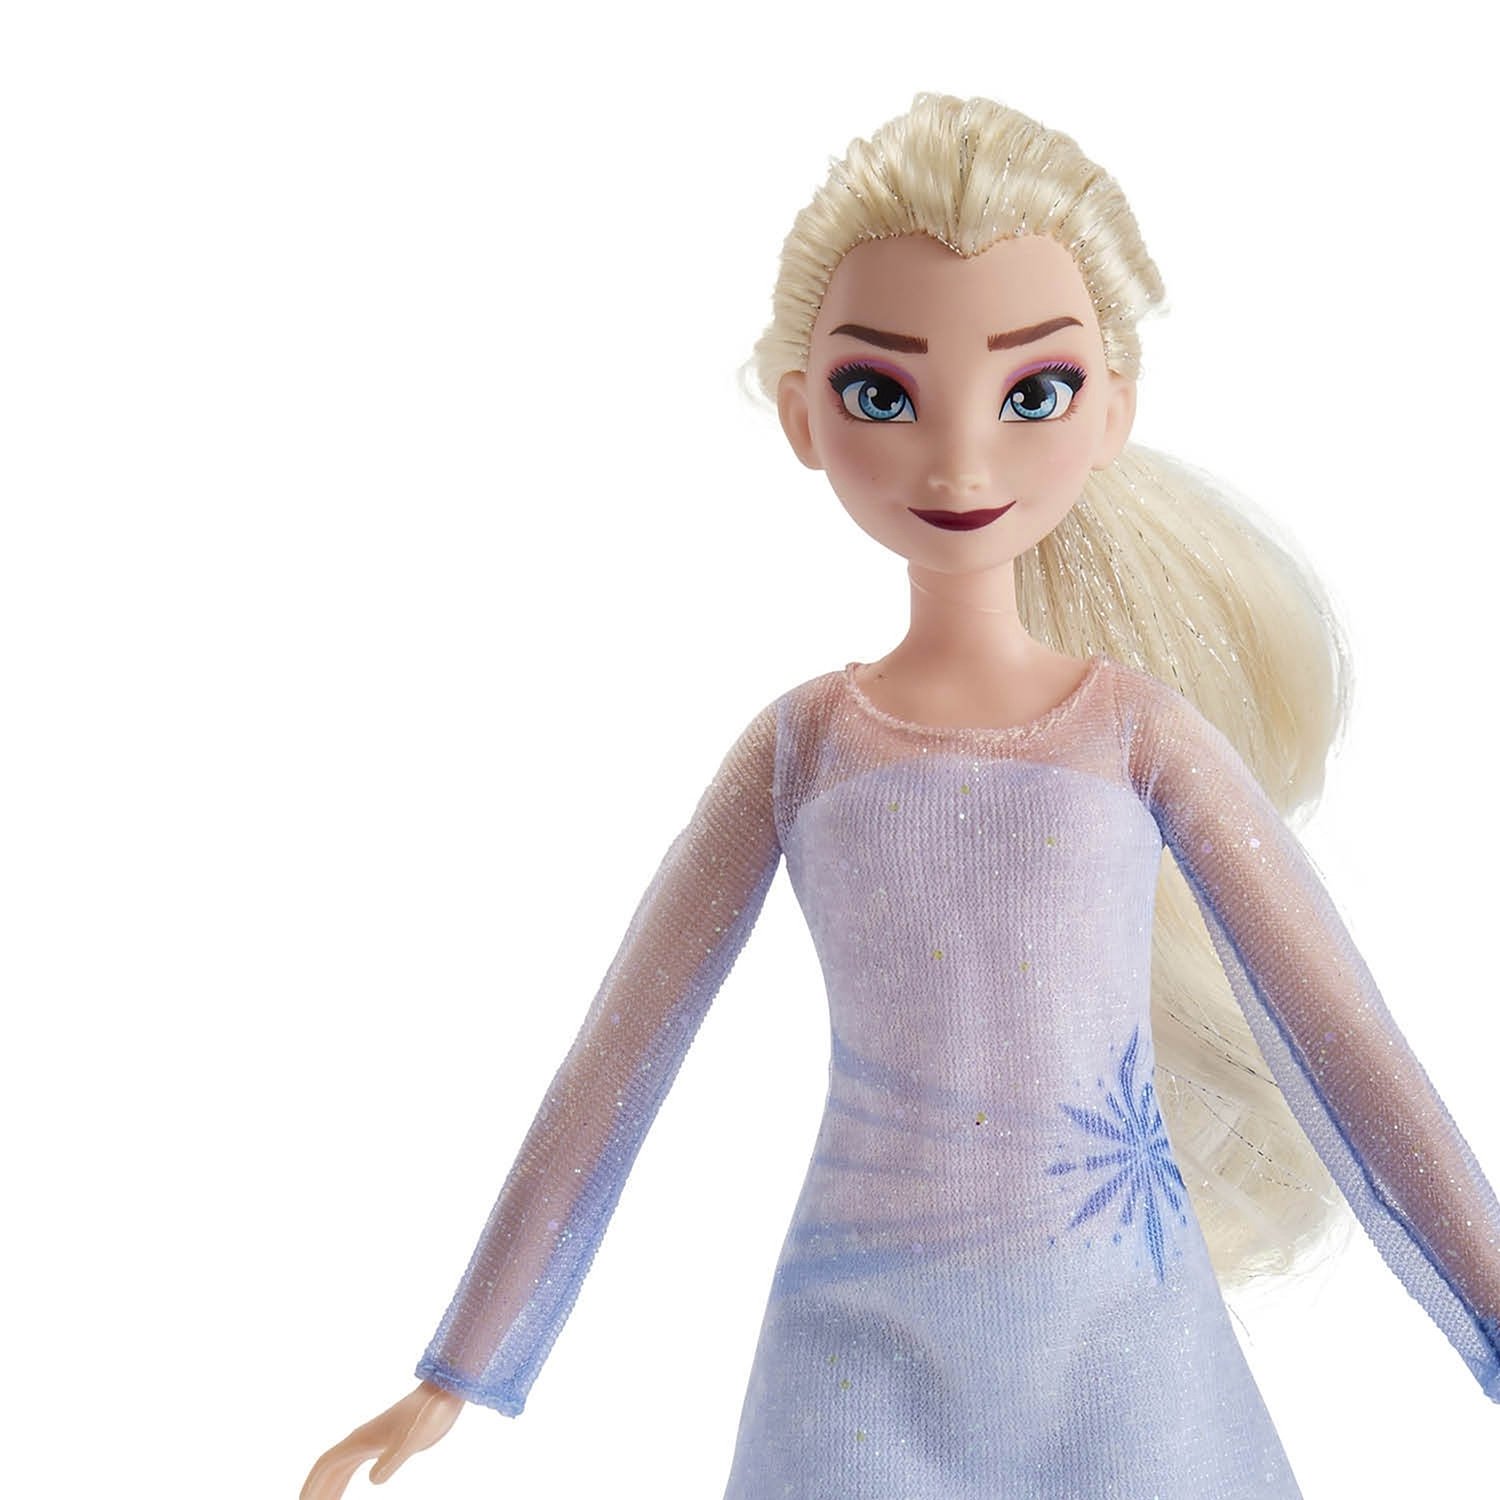 Кукла Hasbro Disney Princess Холодное сердце 2 Эльза и Нокк, E5516